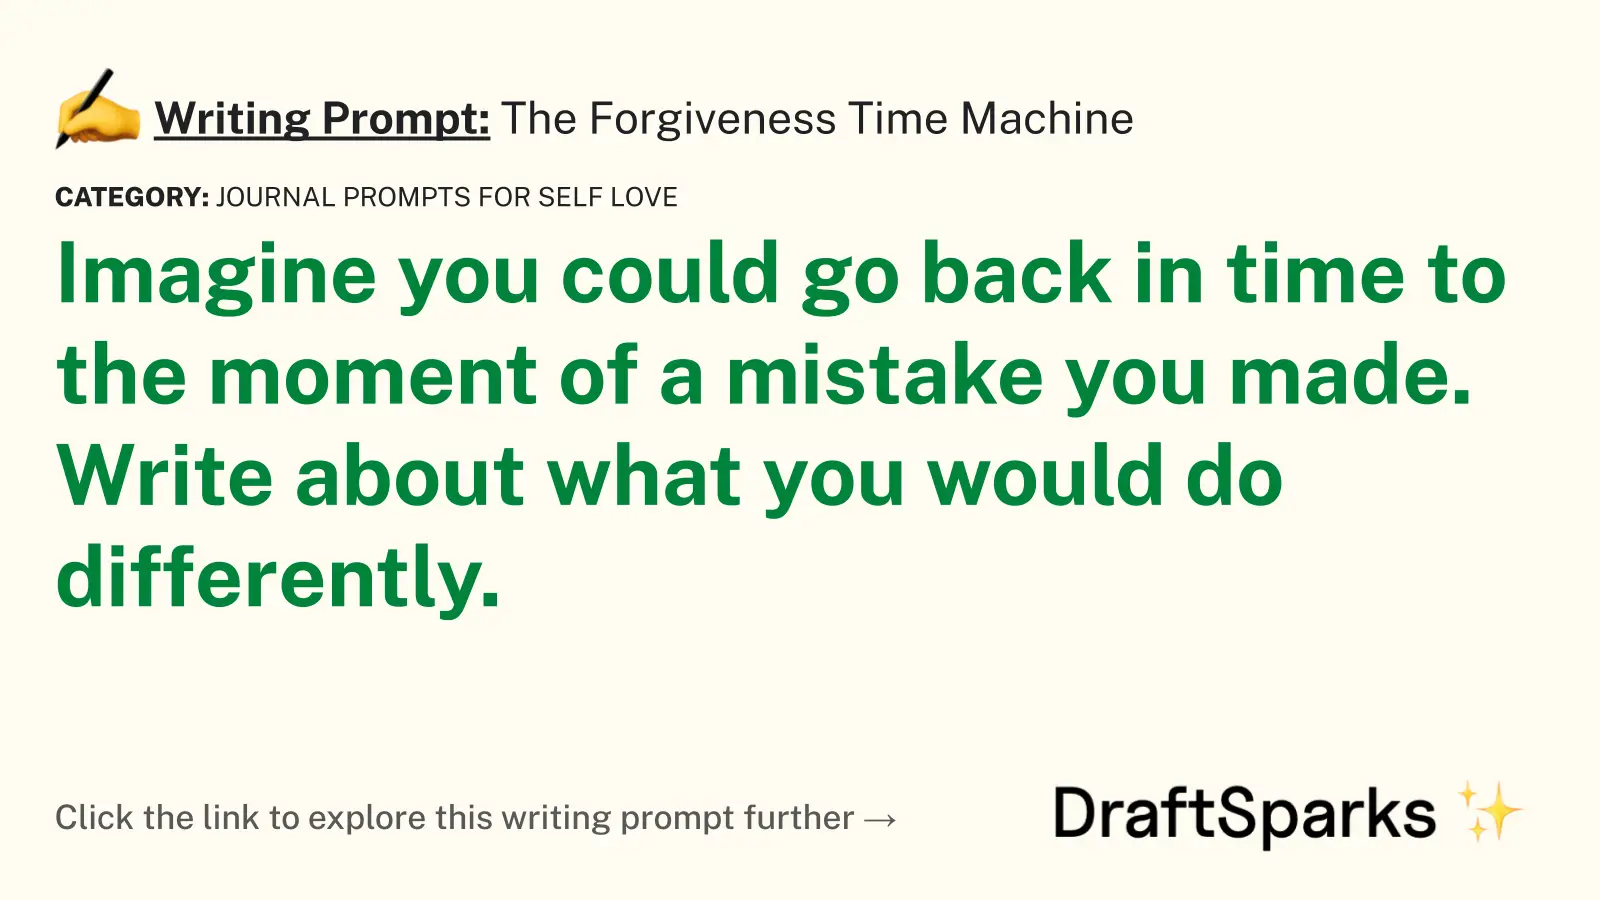 The Forgiveness Time Machine